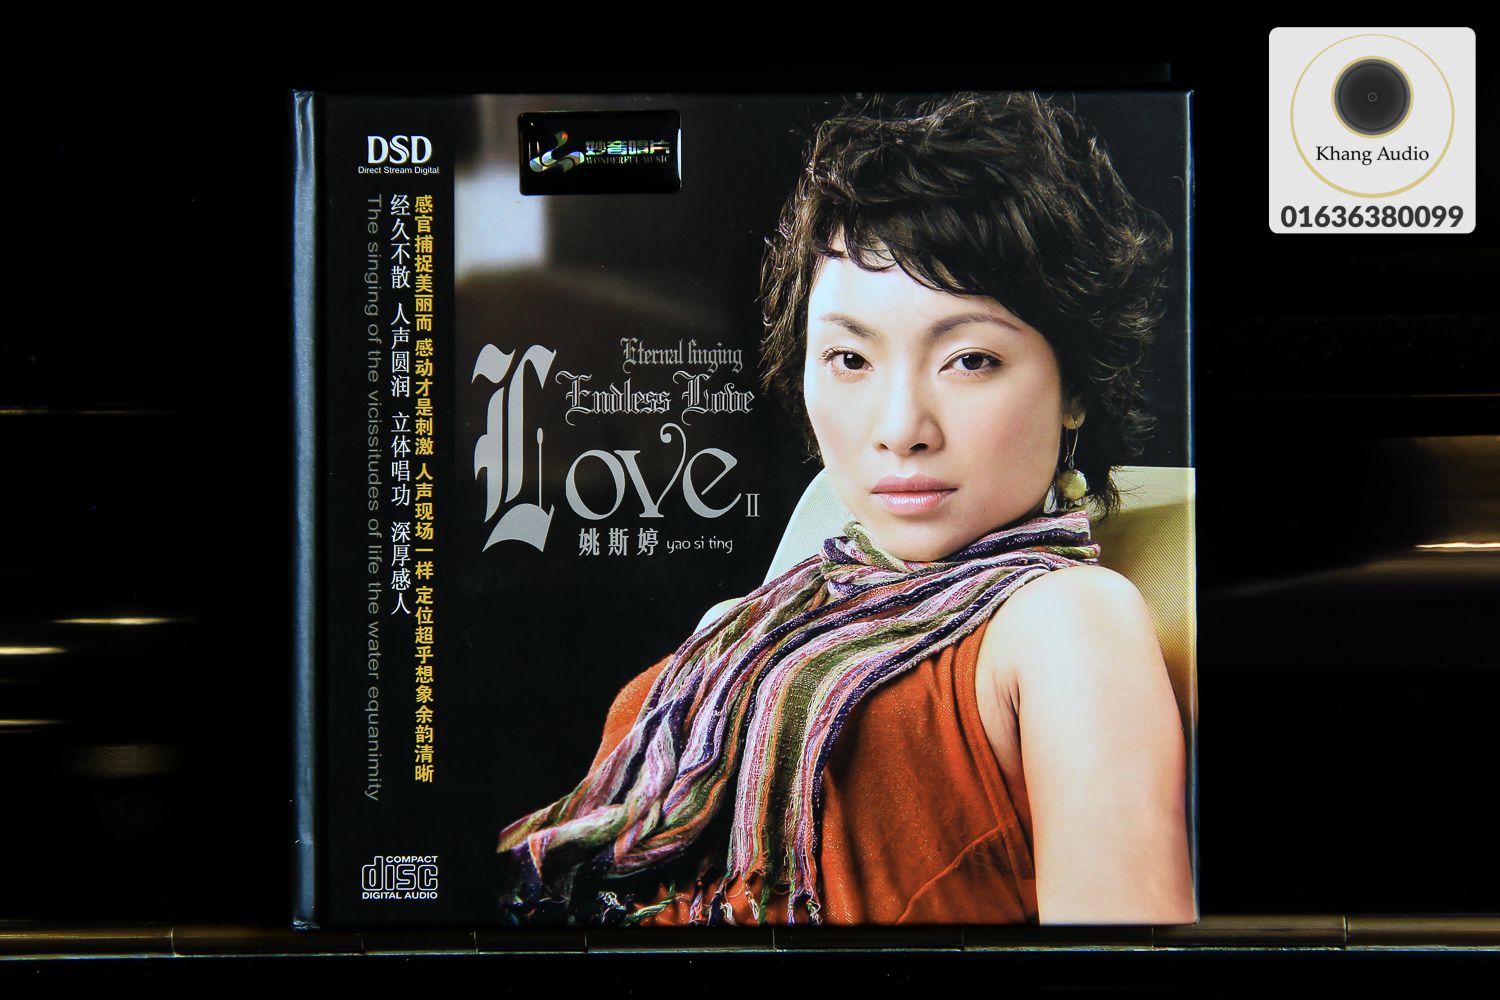 Eternal Singing Endless Love II - Yao Si Ting Khang Audio 0336380099